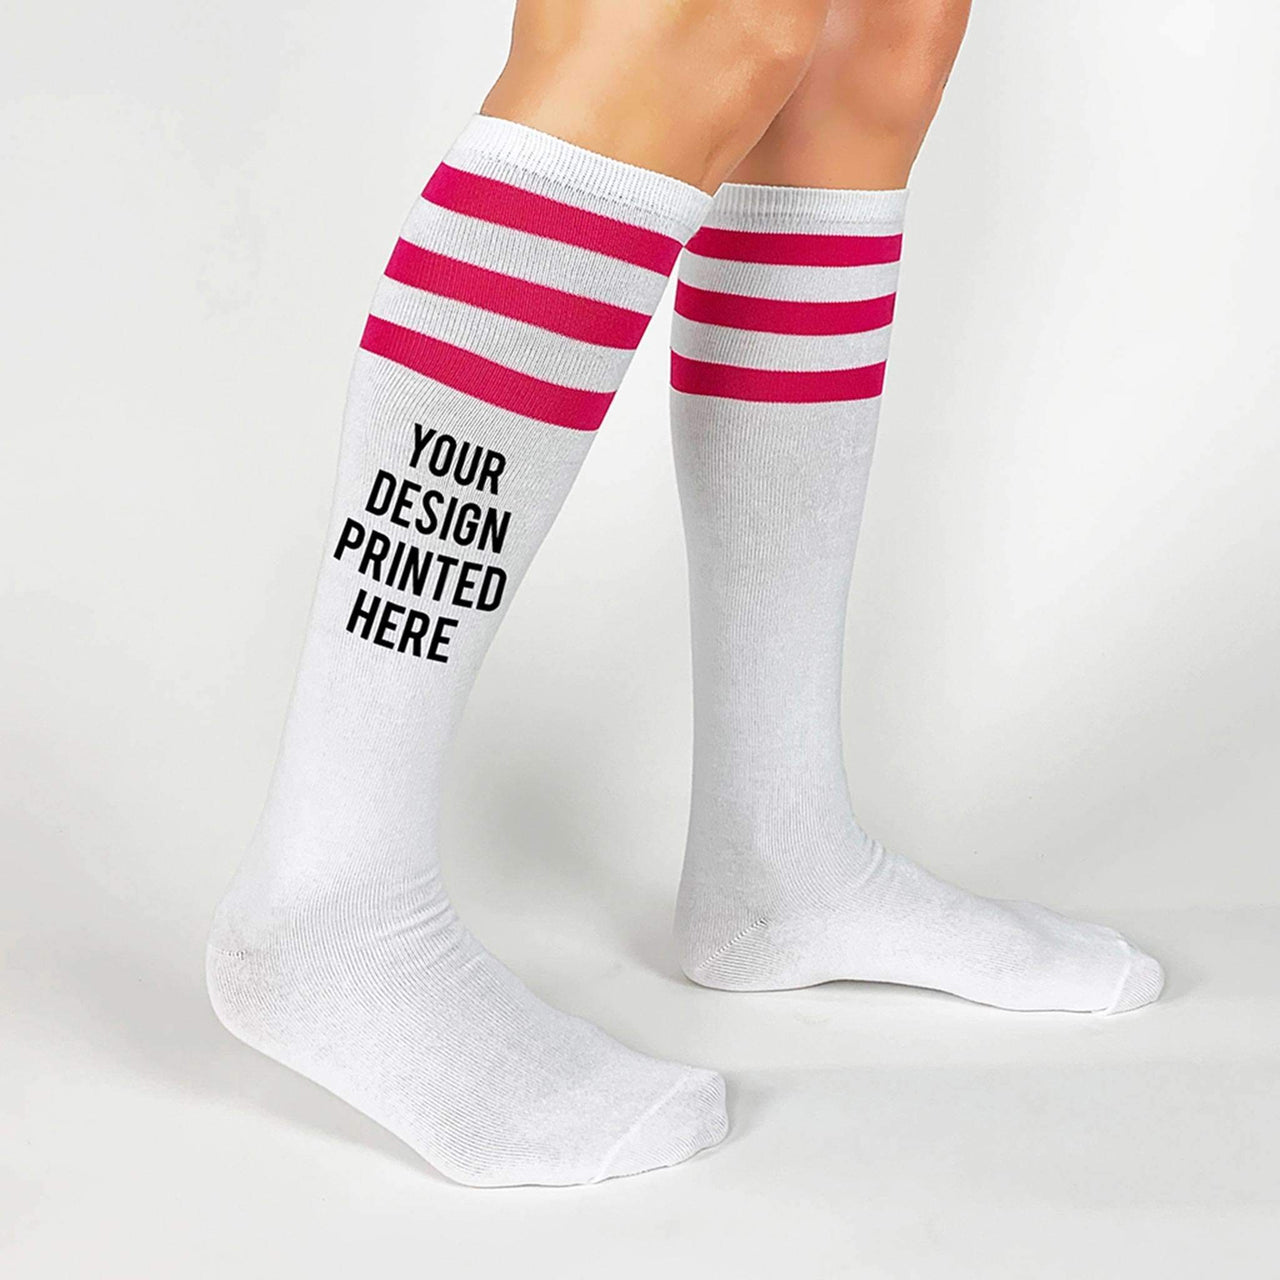 Custom printed white knee high socks with fuchsia stripes.